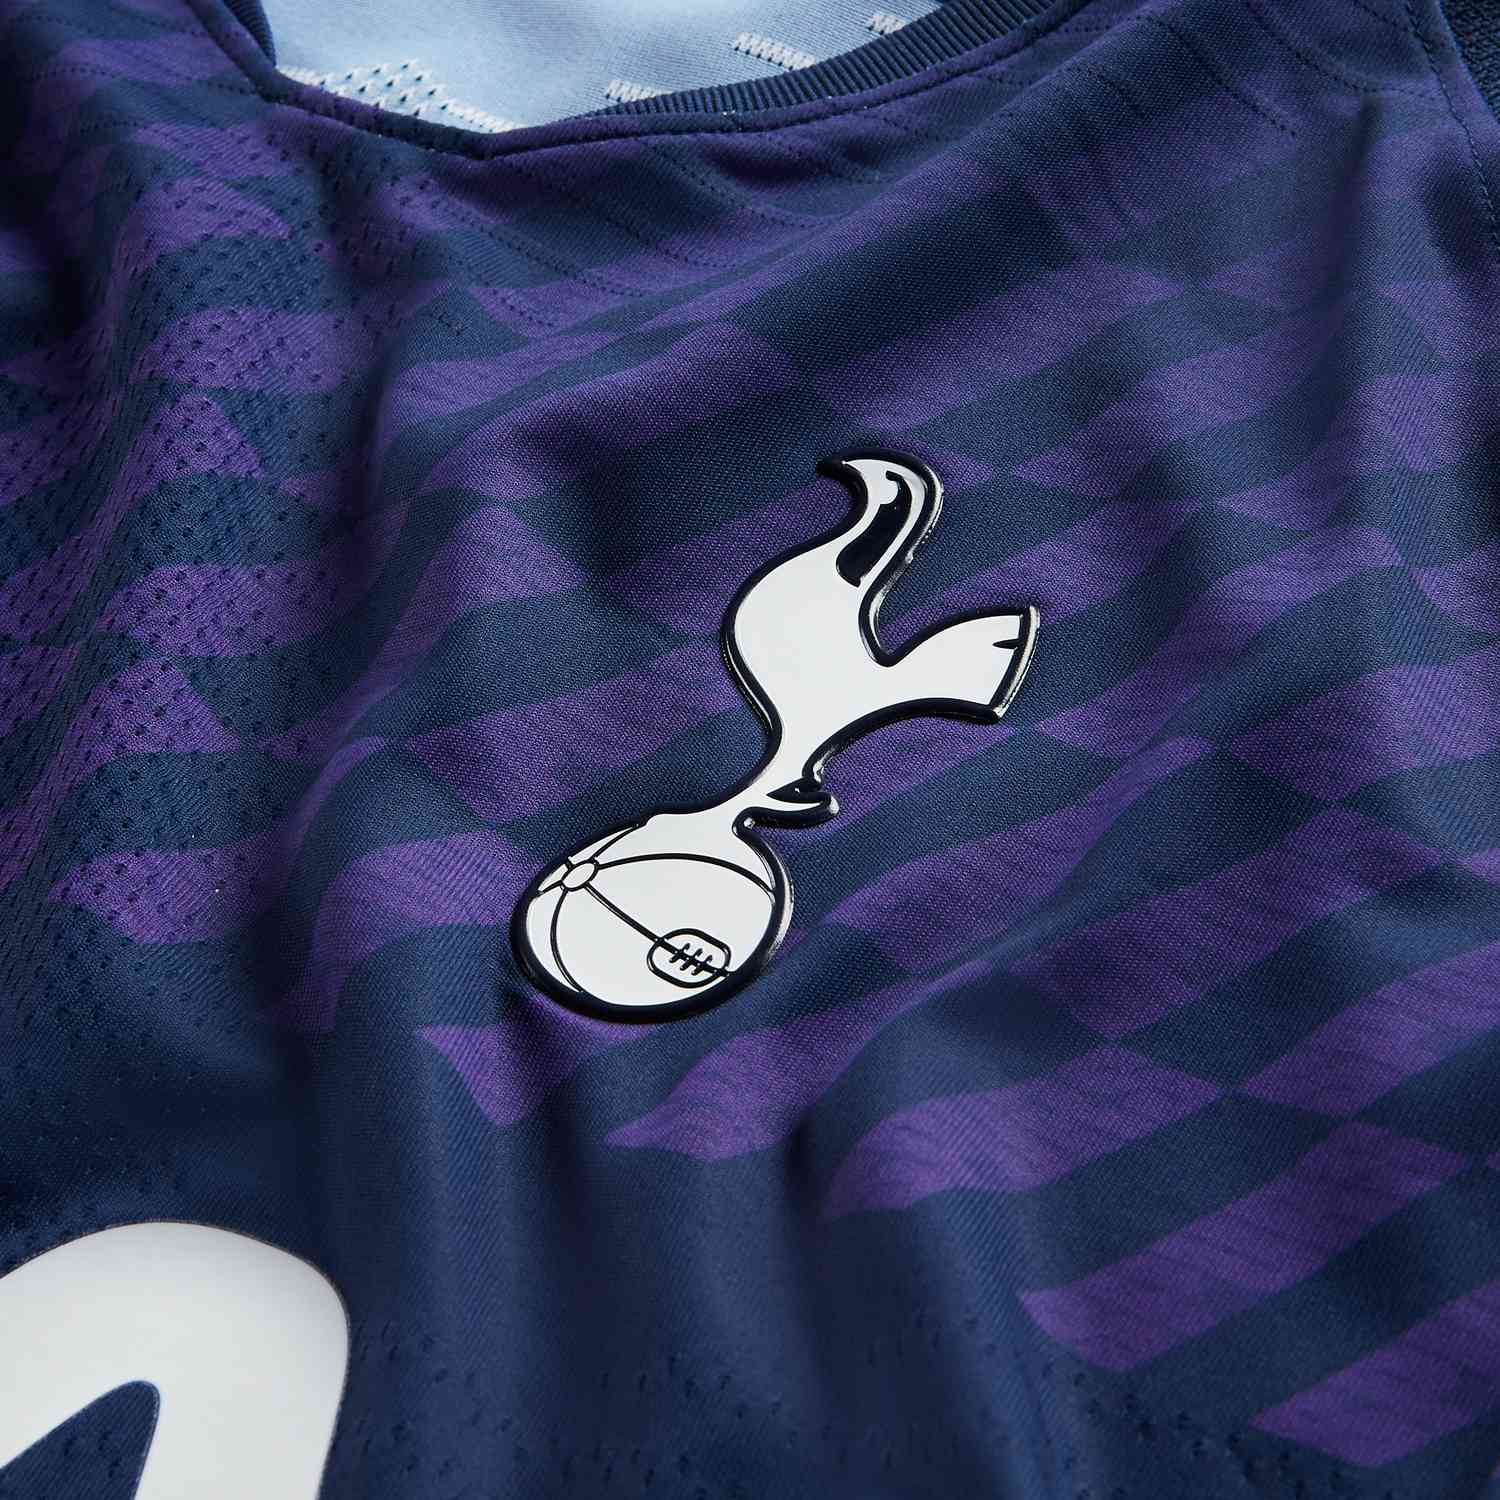 New Tottenham home and away kits 2019-20: Harry Kane and Dele Alli